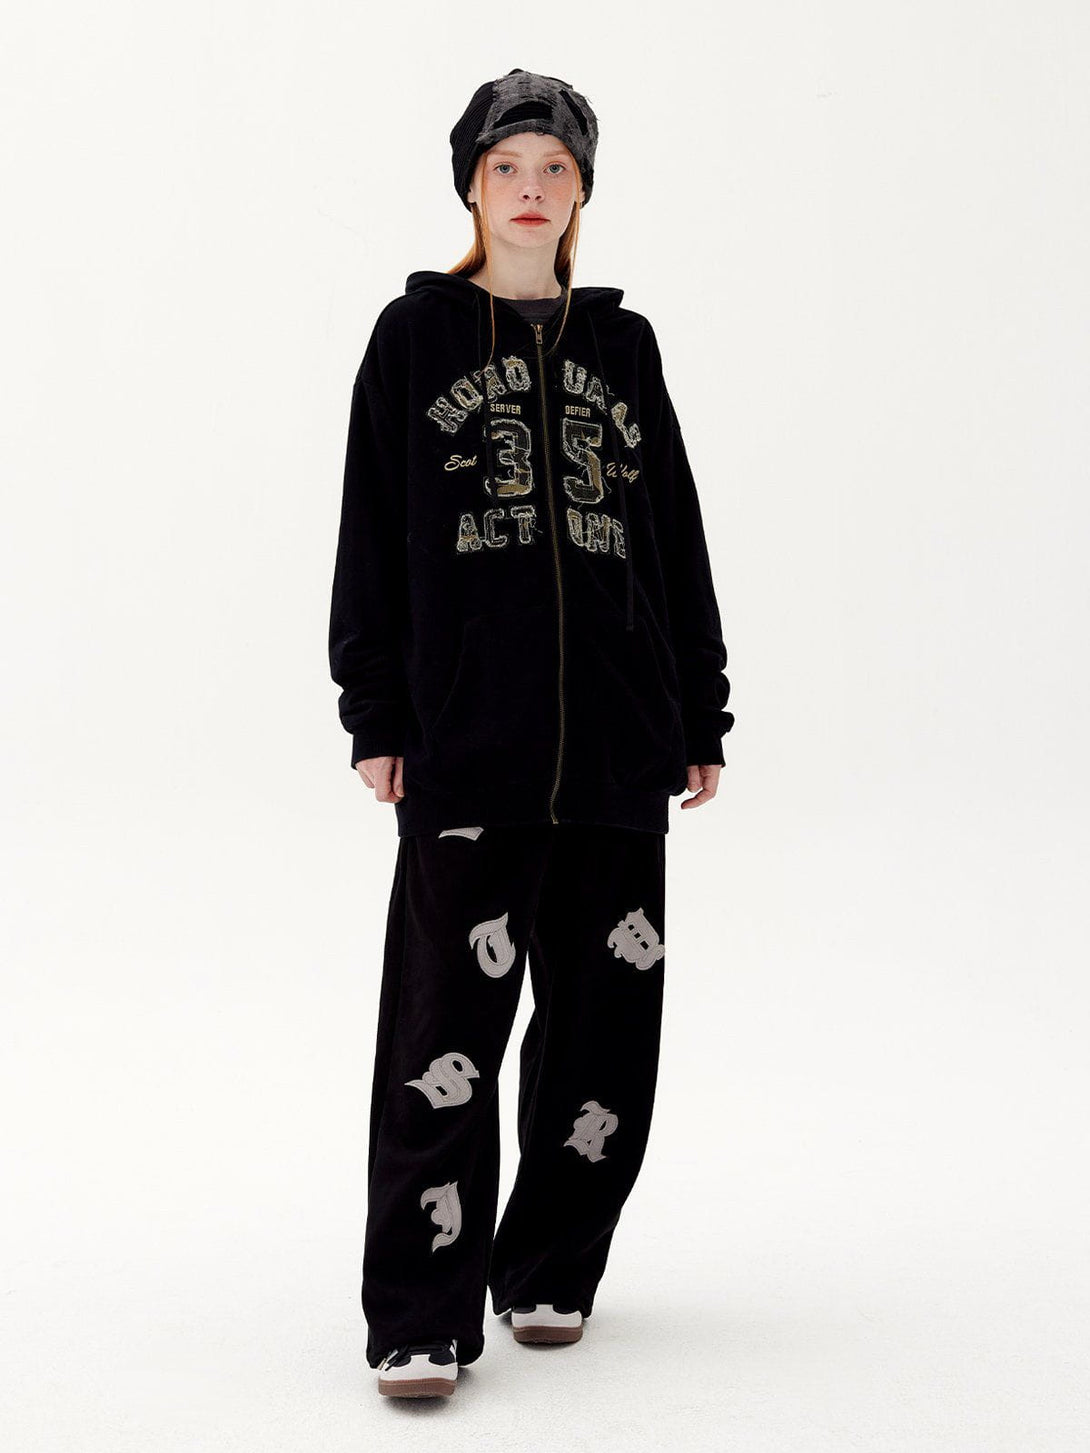 Levefly - Alphabet Patch Sweatpants - Streetwear Fashion - levefly.com